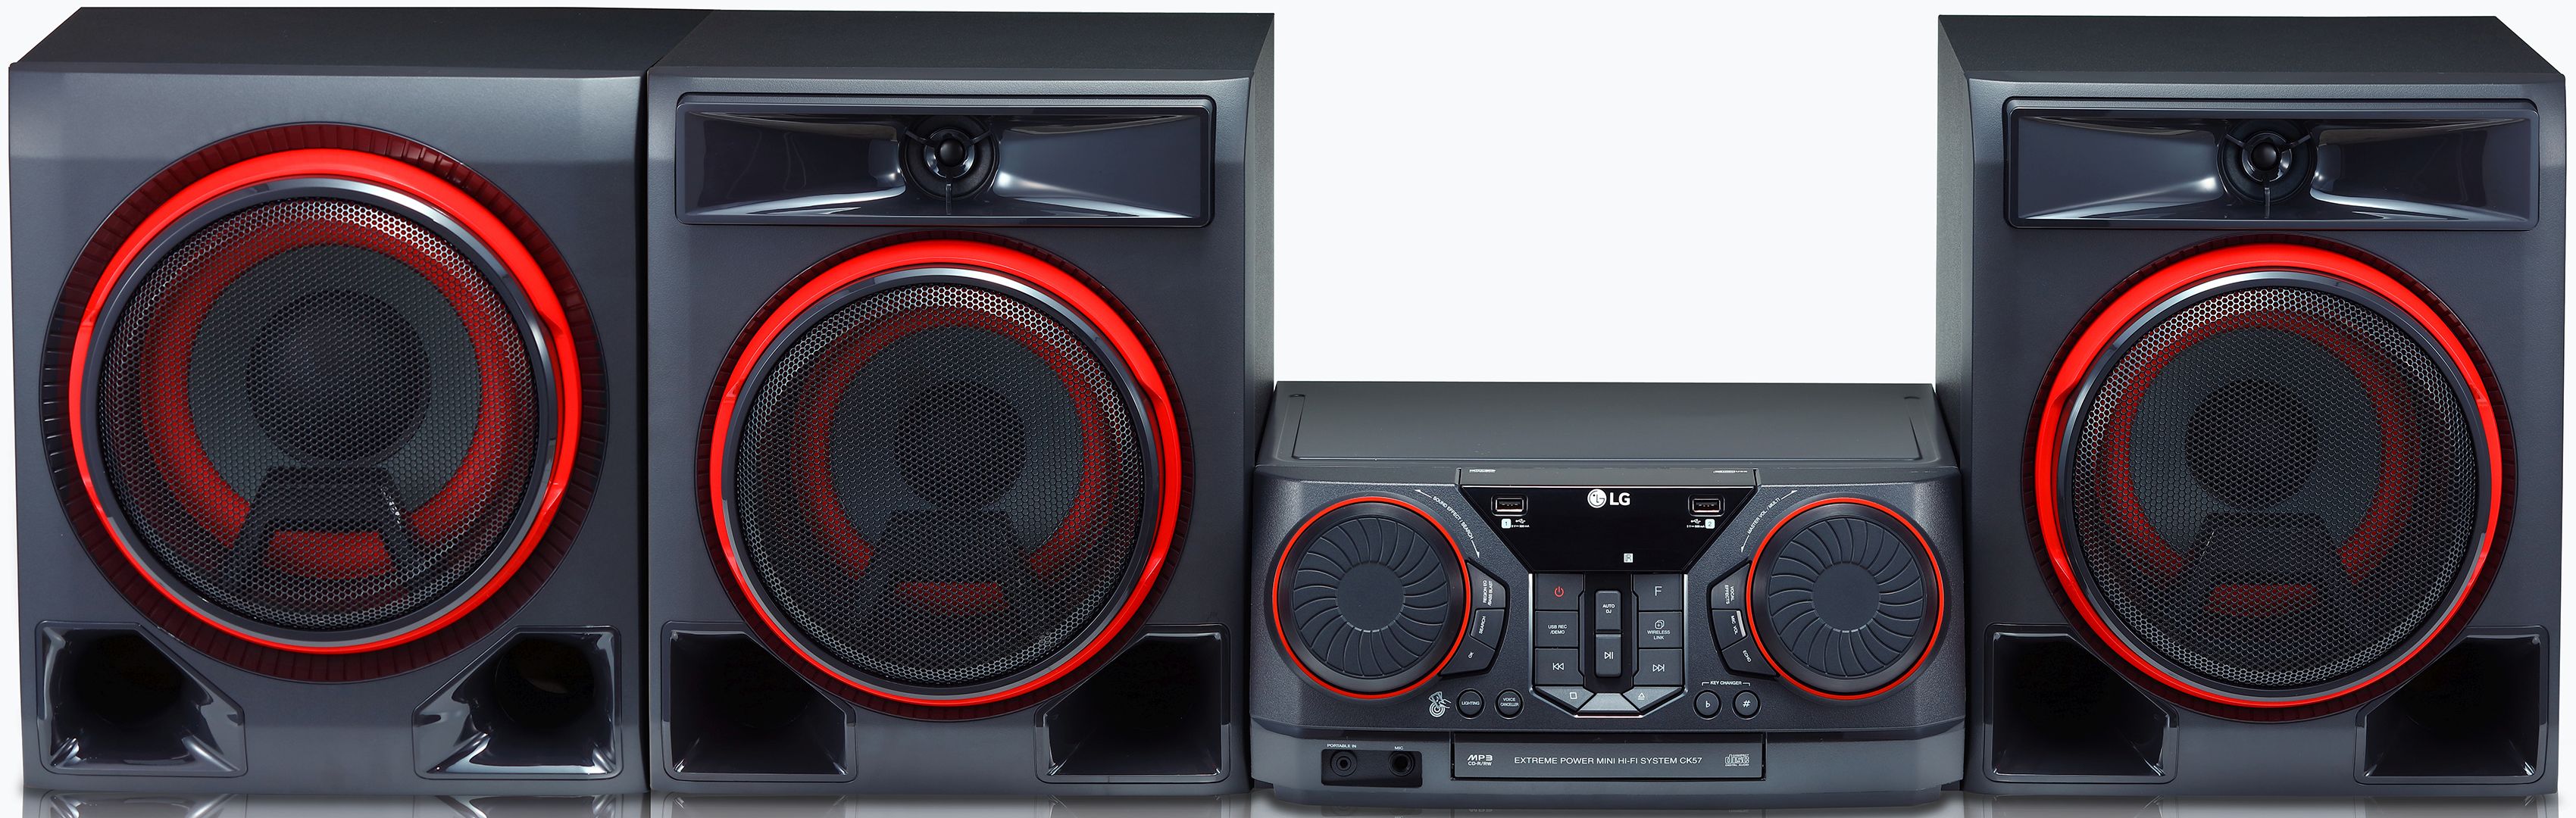 LG XBOOM 1100W Black Hi-Fi Entertainment System